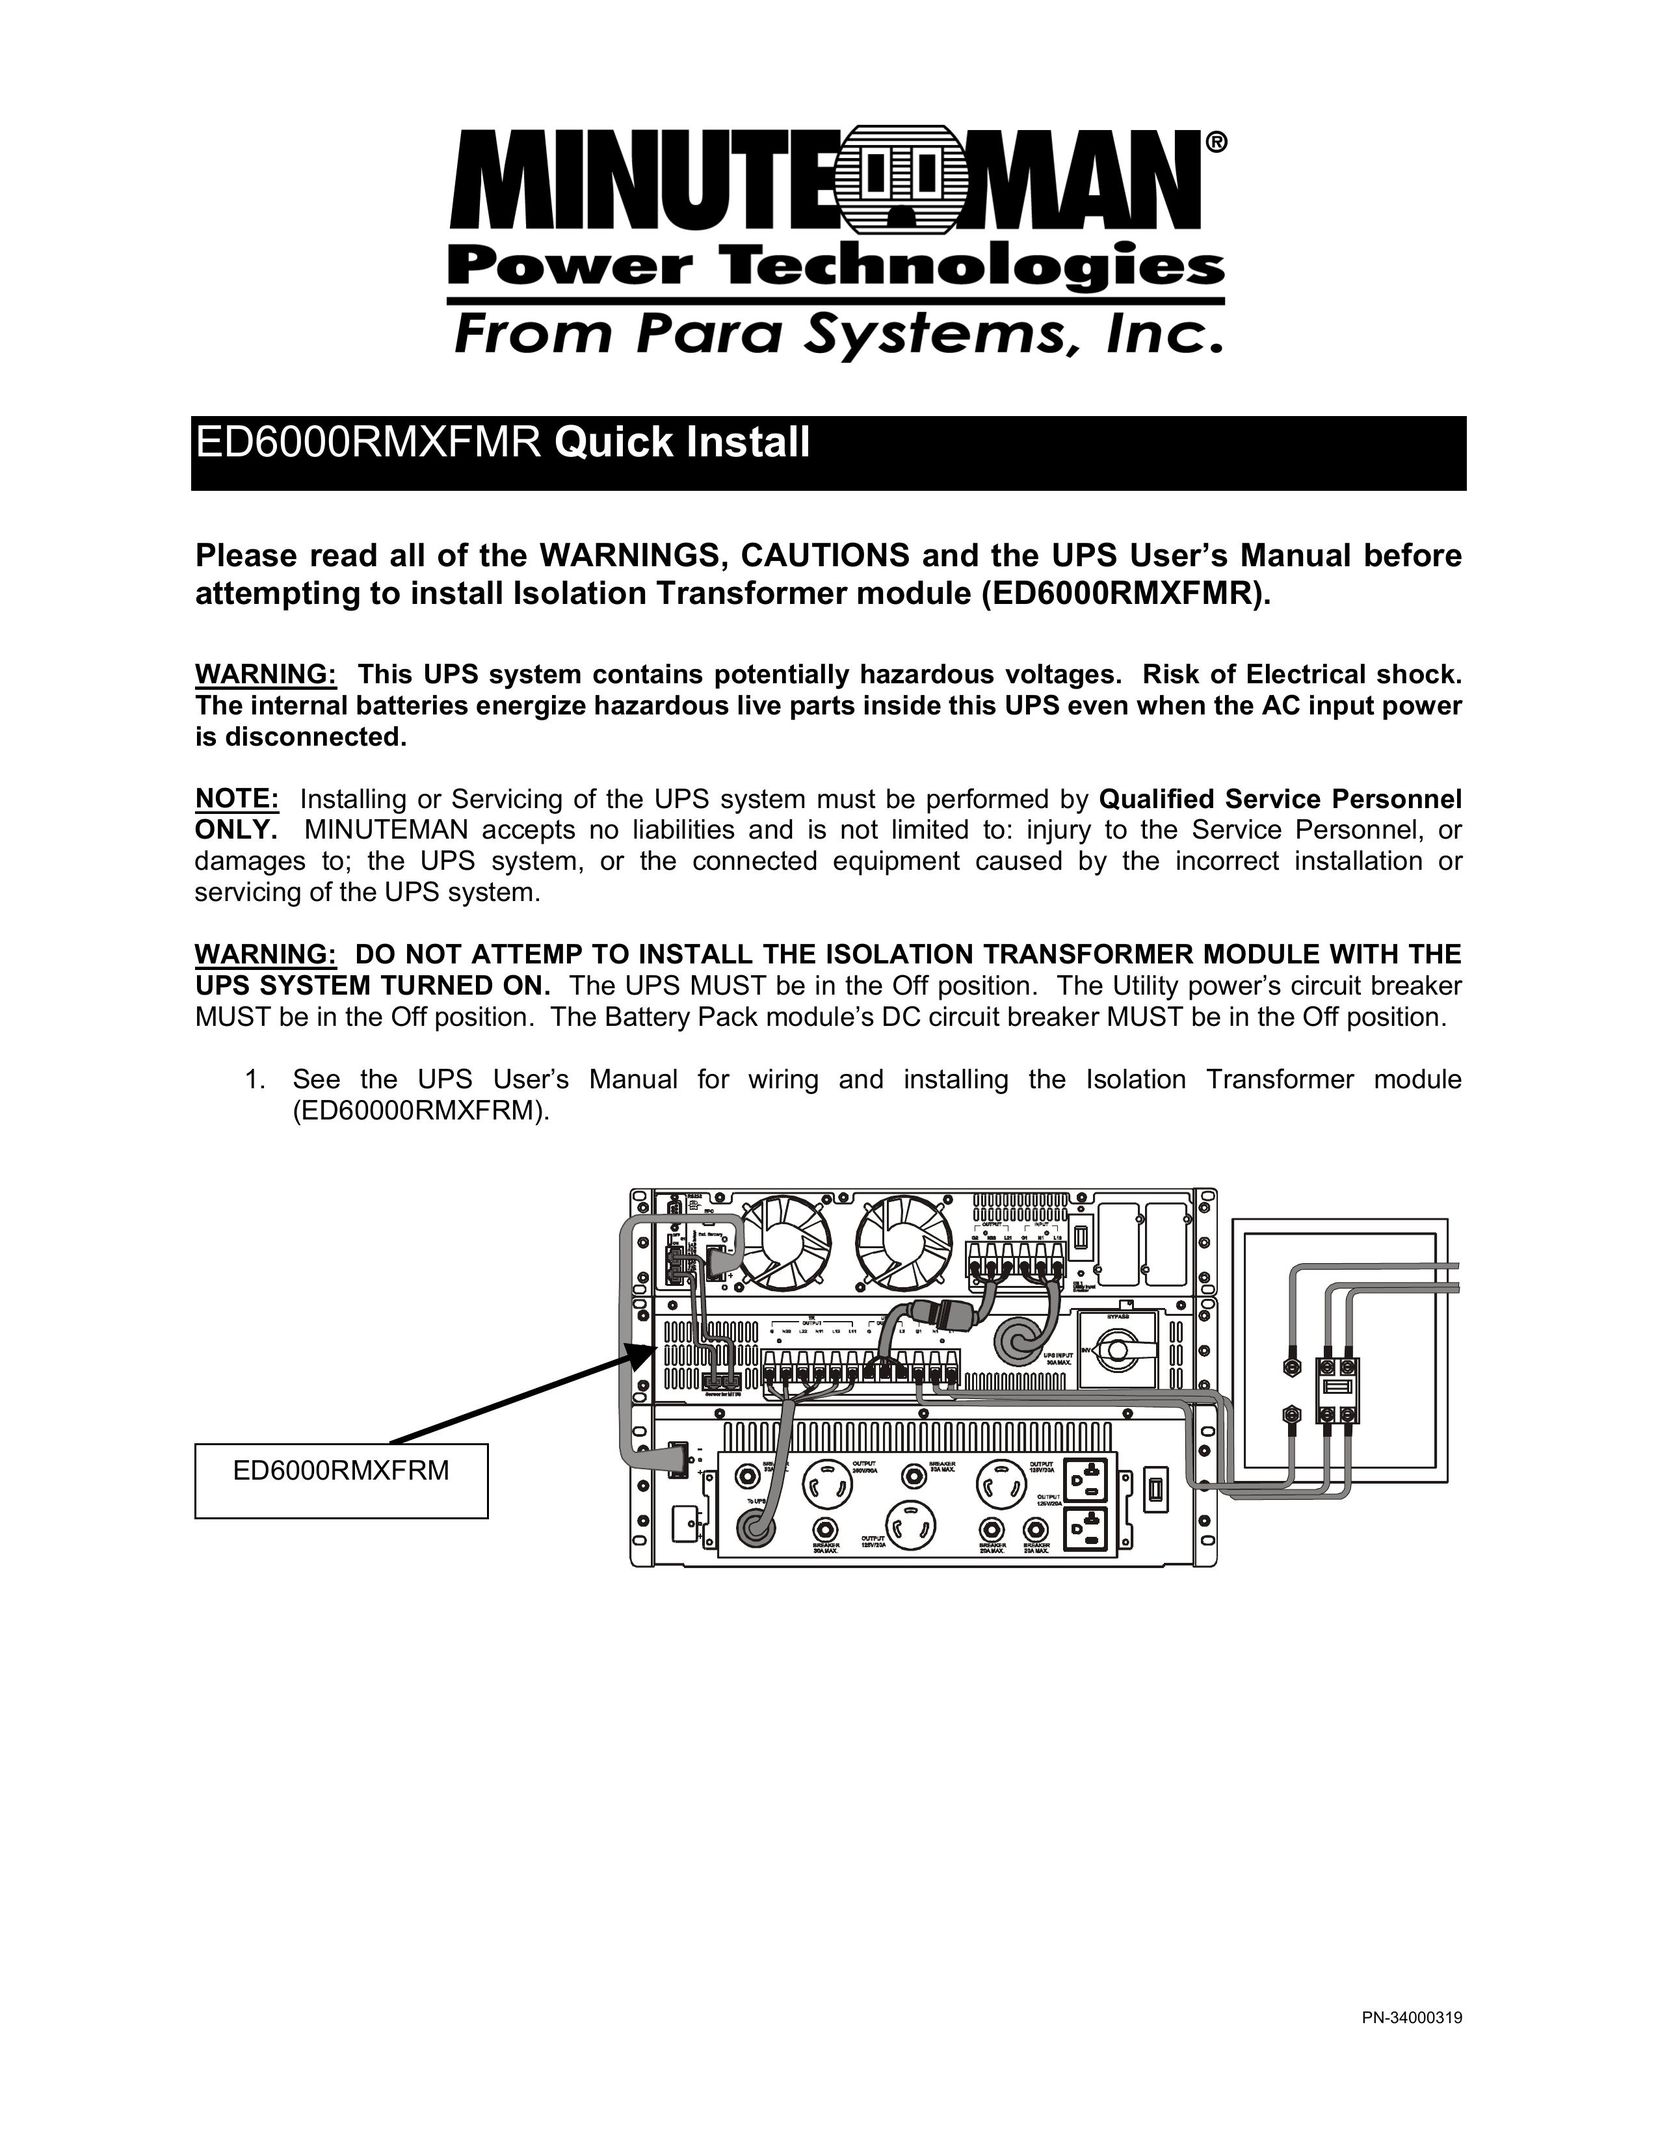 Minuteman UPS ED6000RMXFMR Power Supply User Manual